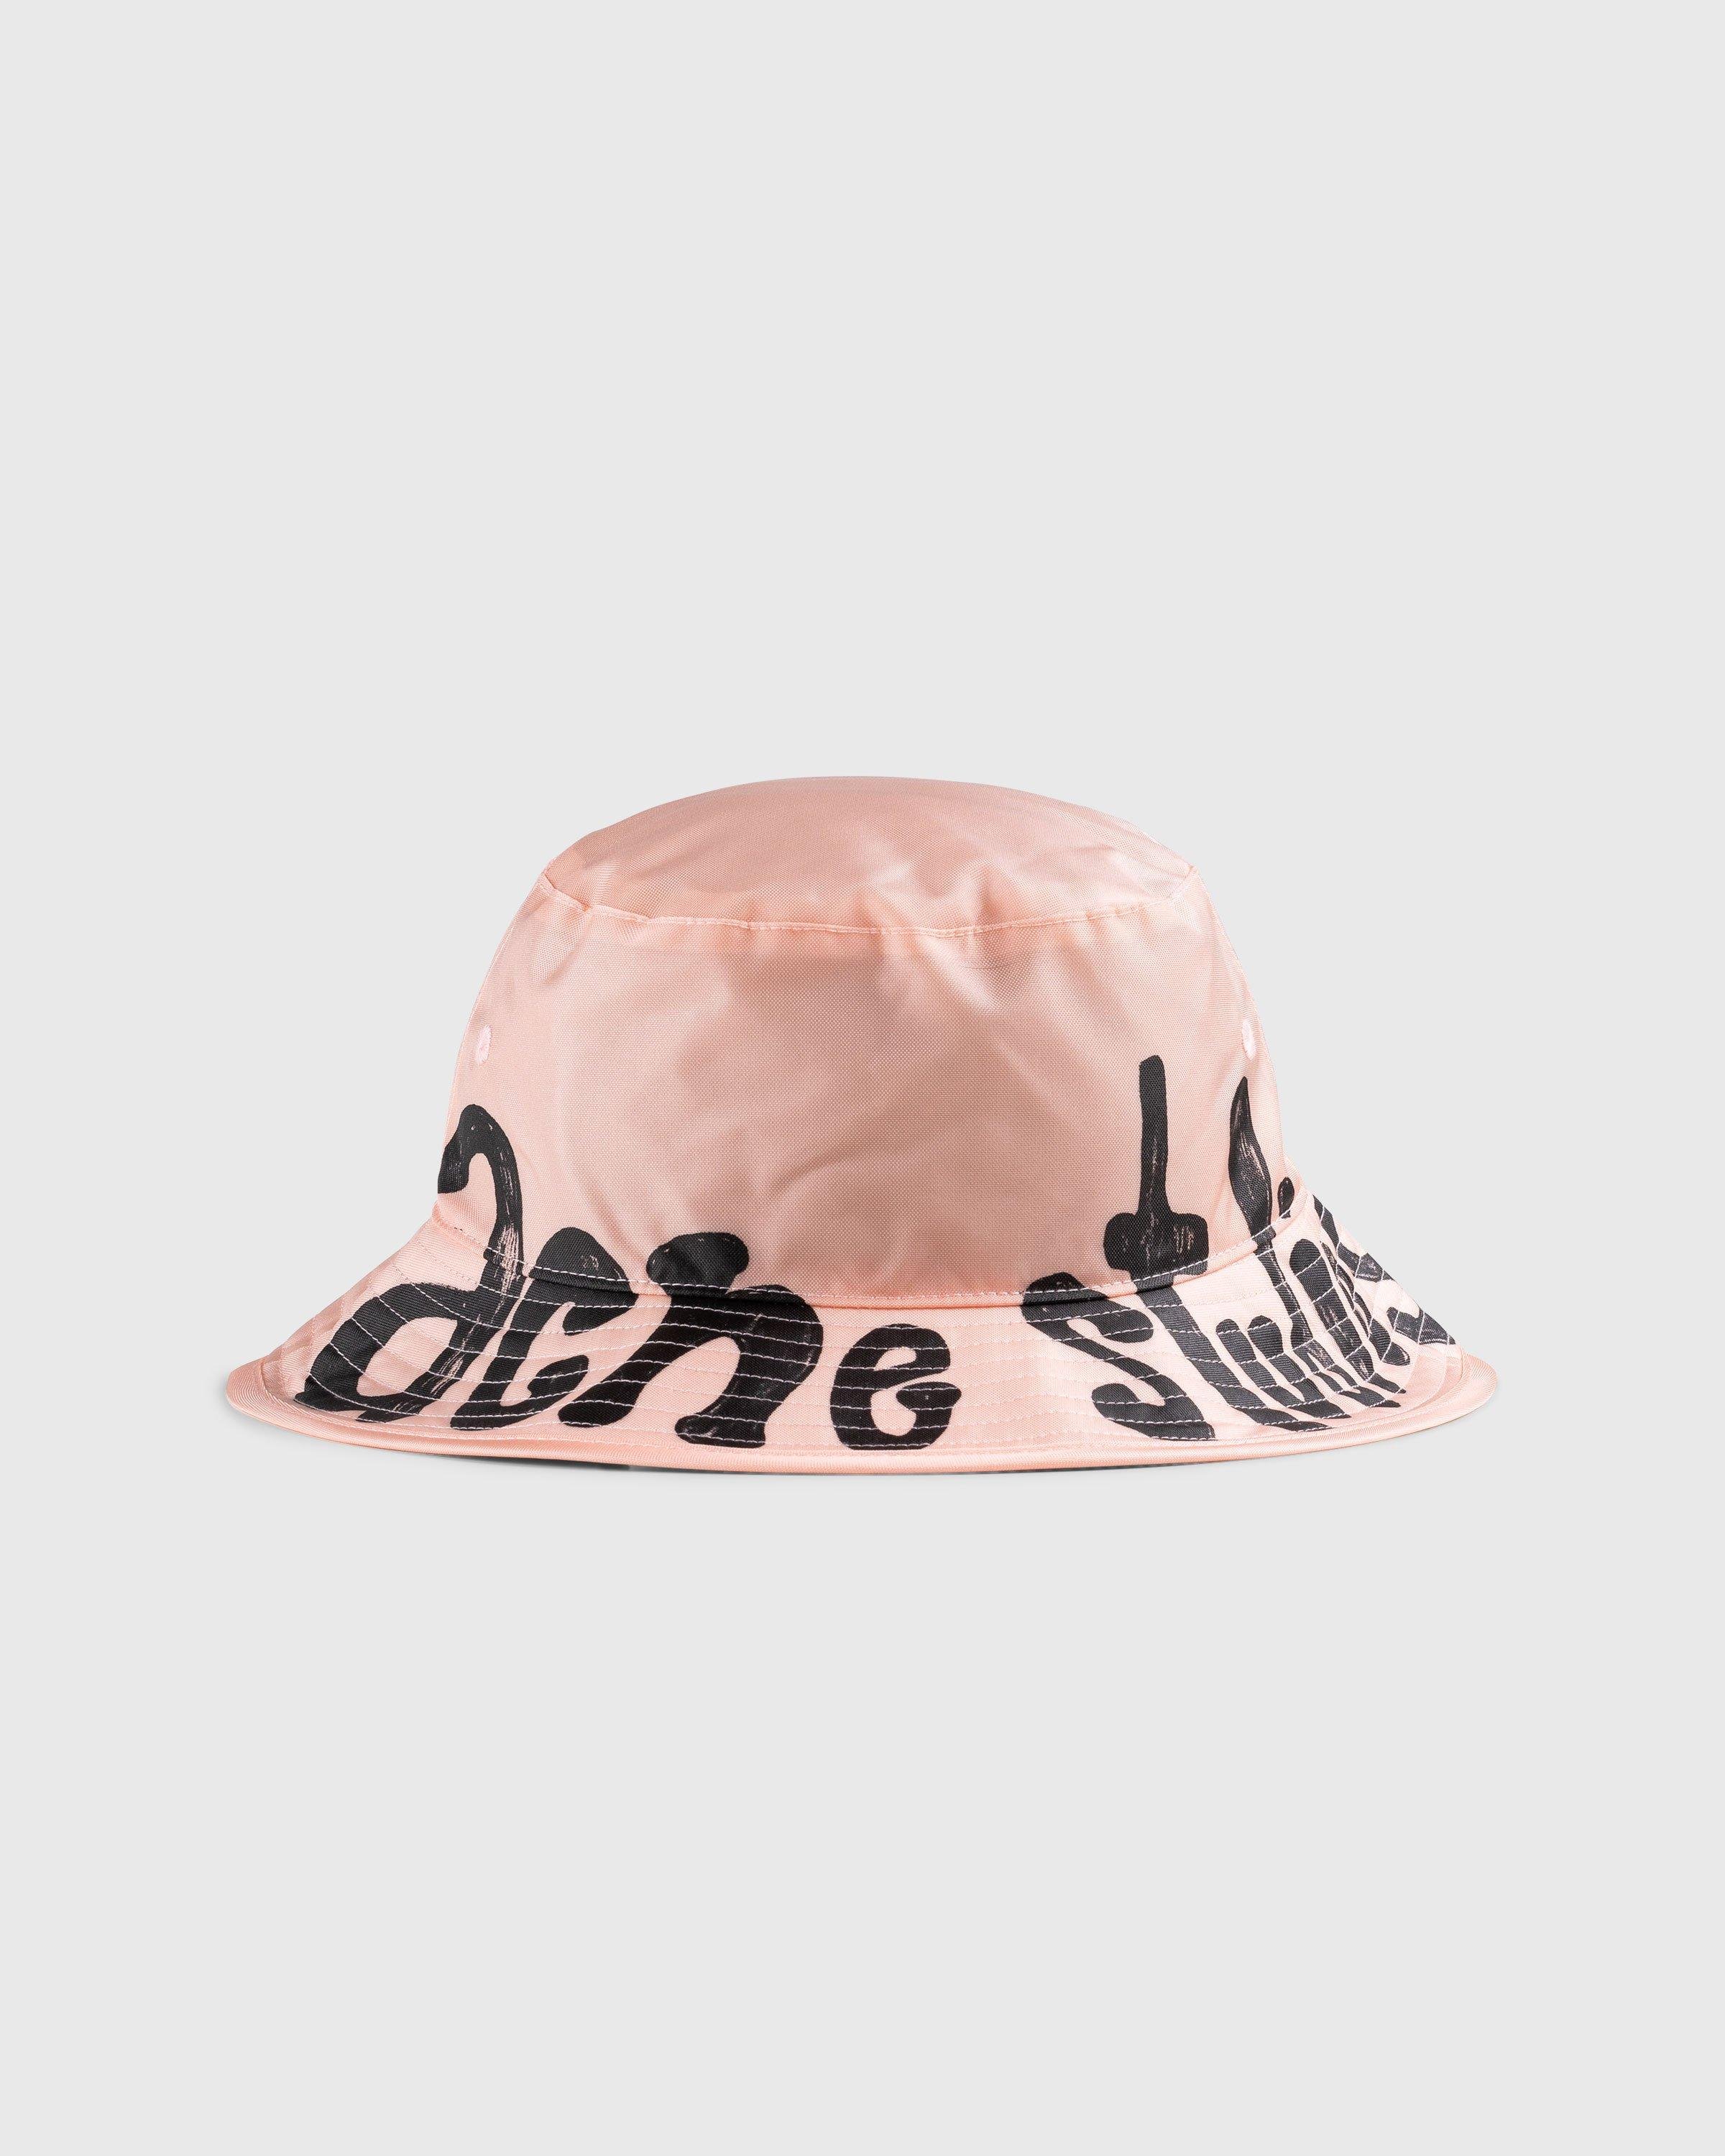 Acne StudiosLogo Bucket Hat Peach Pink by HIGHSNOBIETY